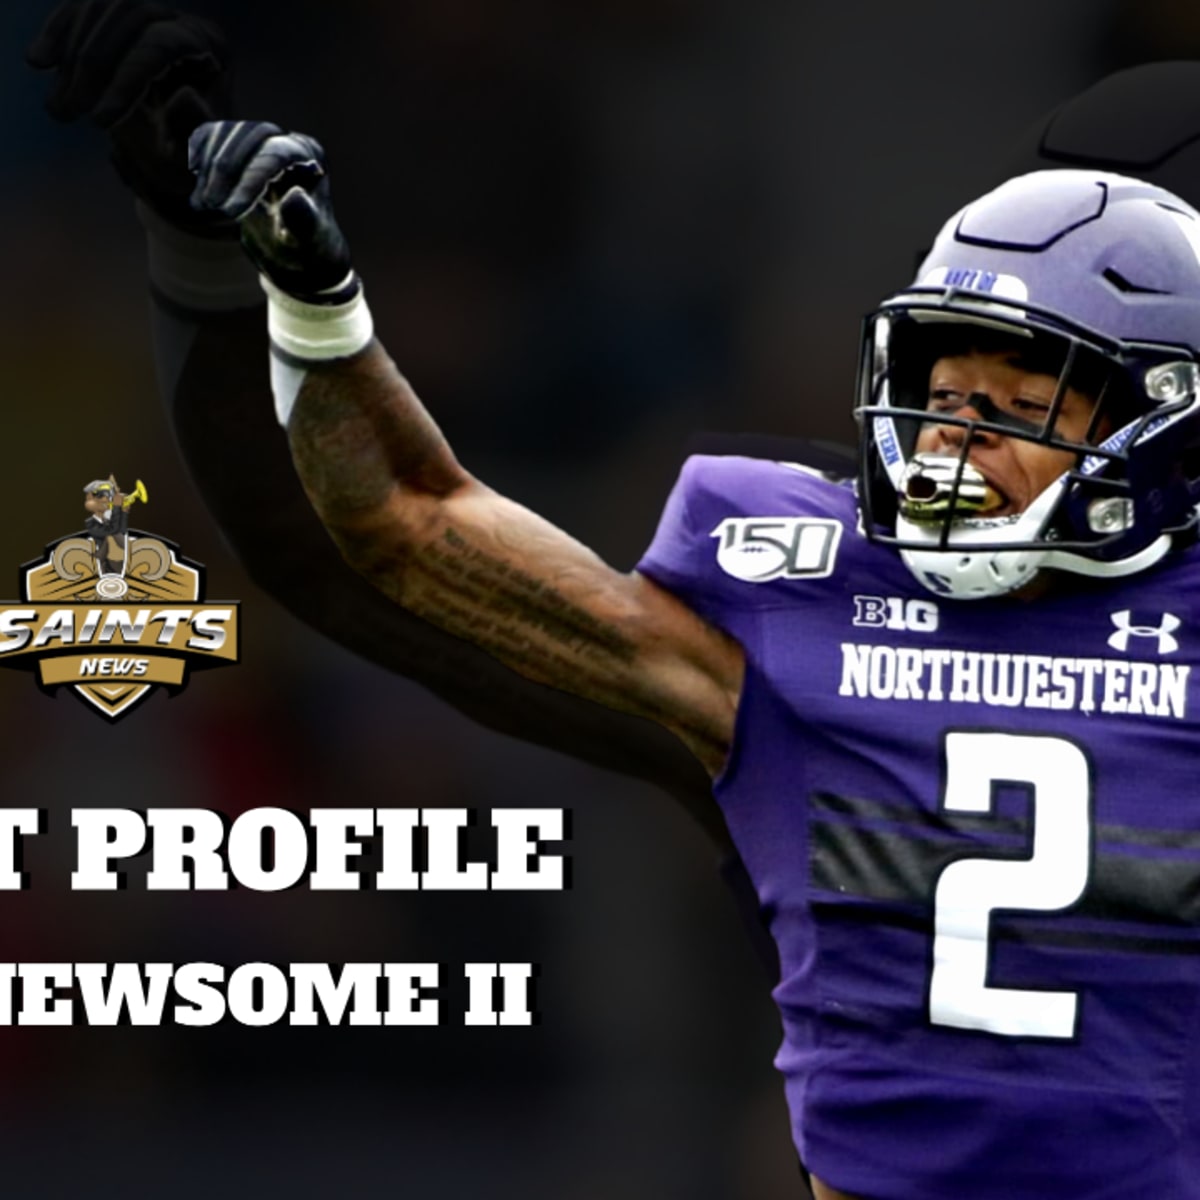 Draft profile: Northwestern's Greg Newsome II